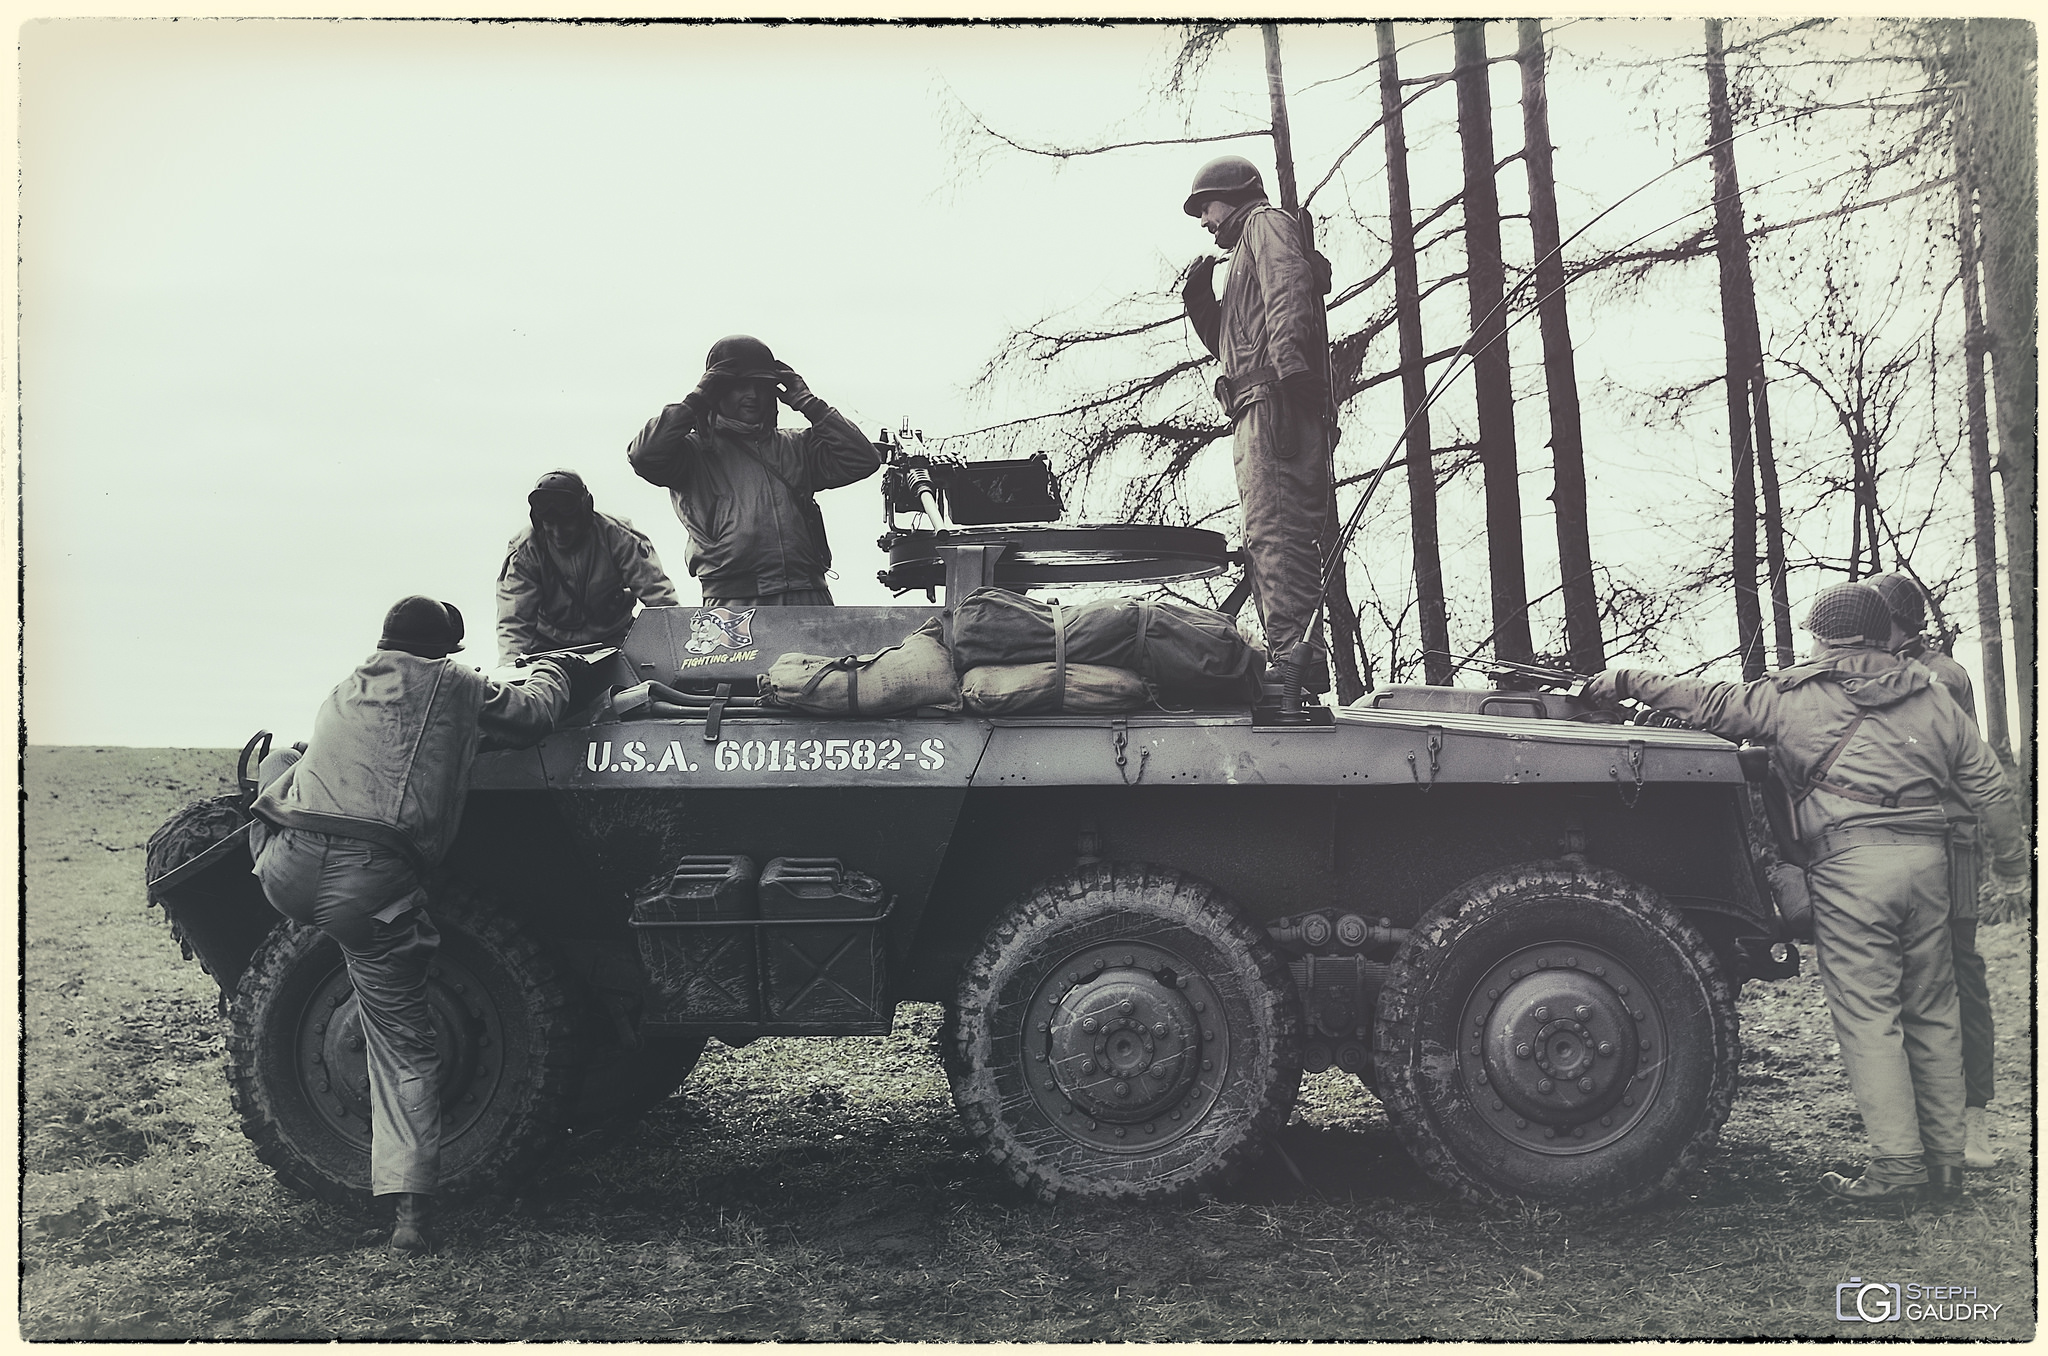 Bataille des Ardennes - Vintage / U.S.A. 60113582-S - vintage